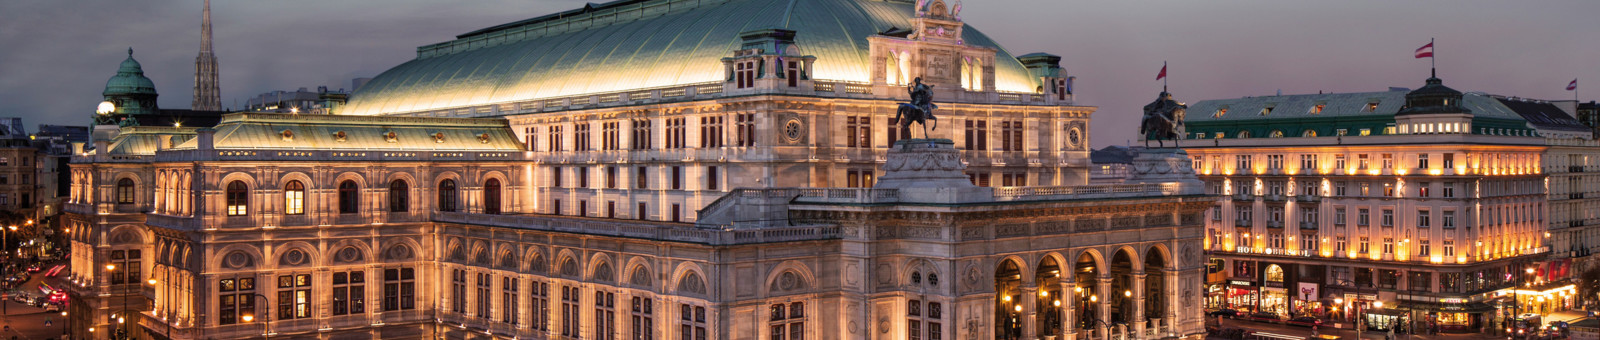     The majestic Vienna State Opera 